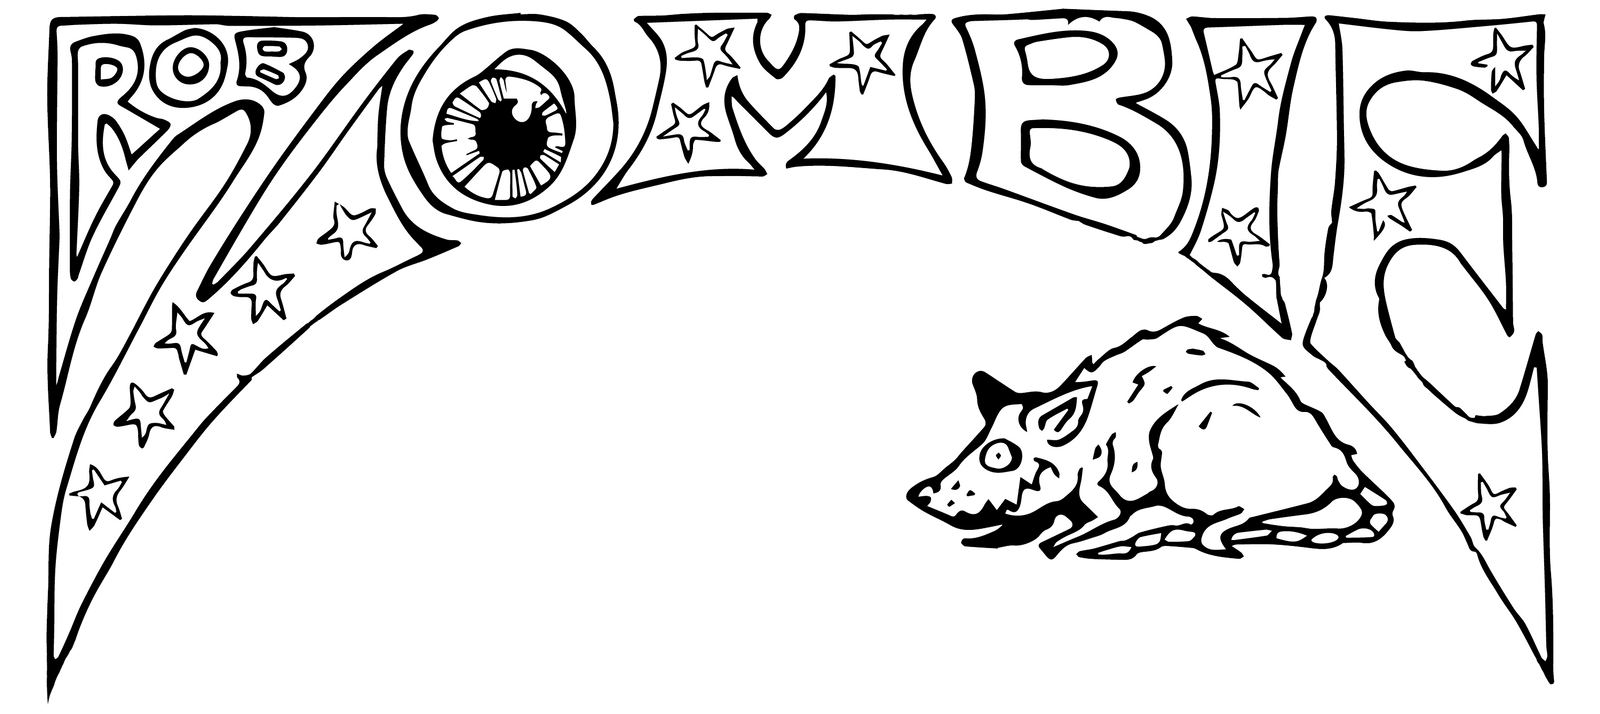 Rob Zombie - Venomous Rat Regeneration Vendor Logo